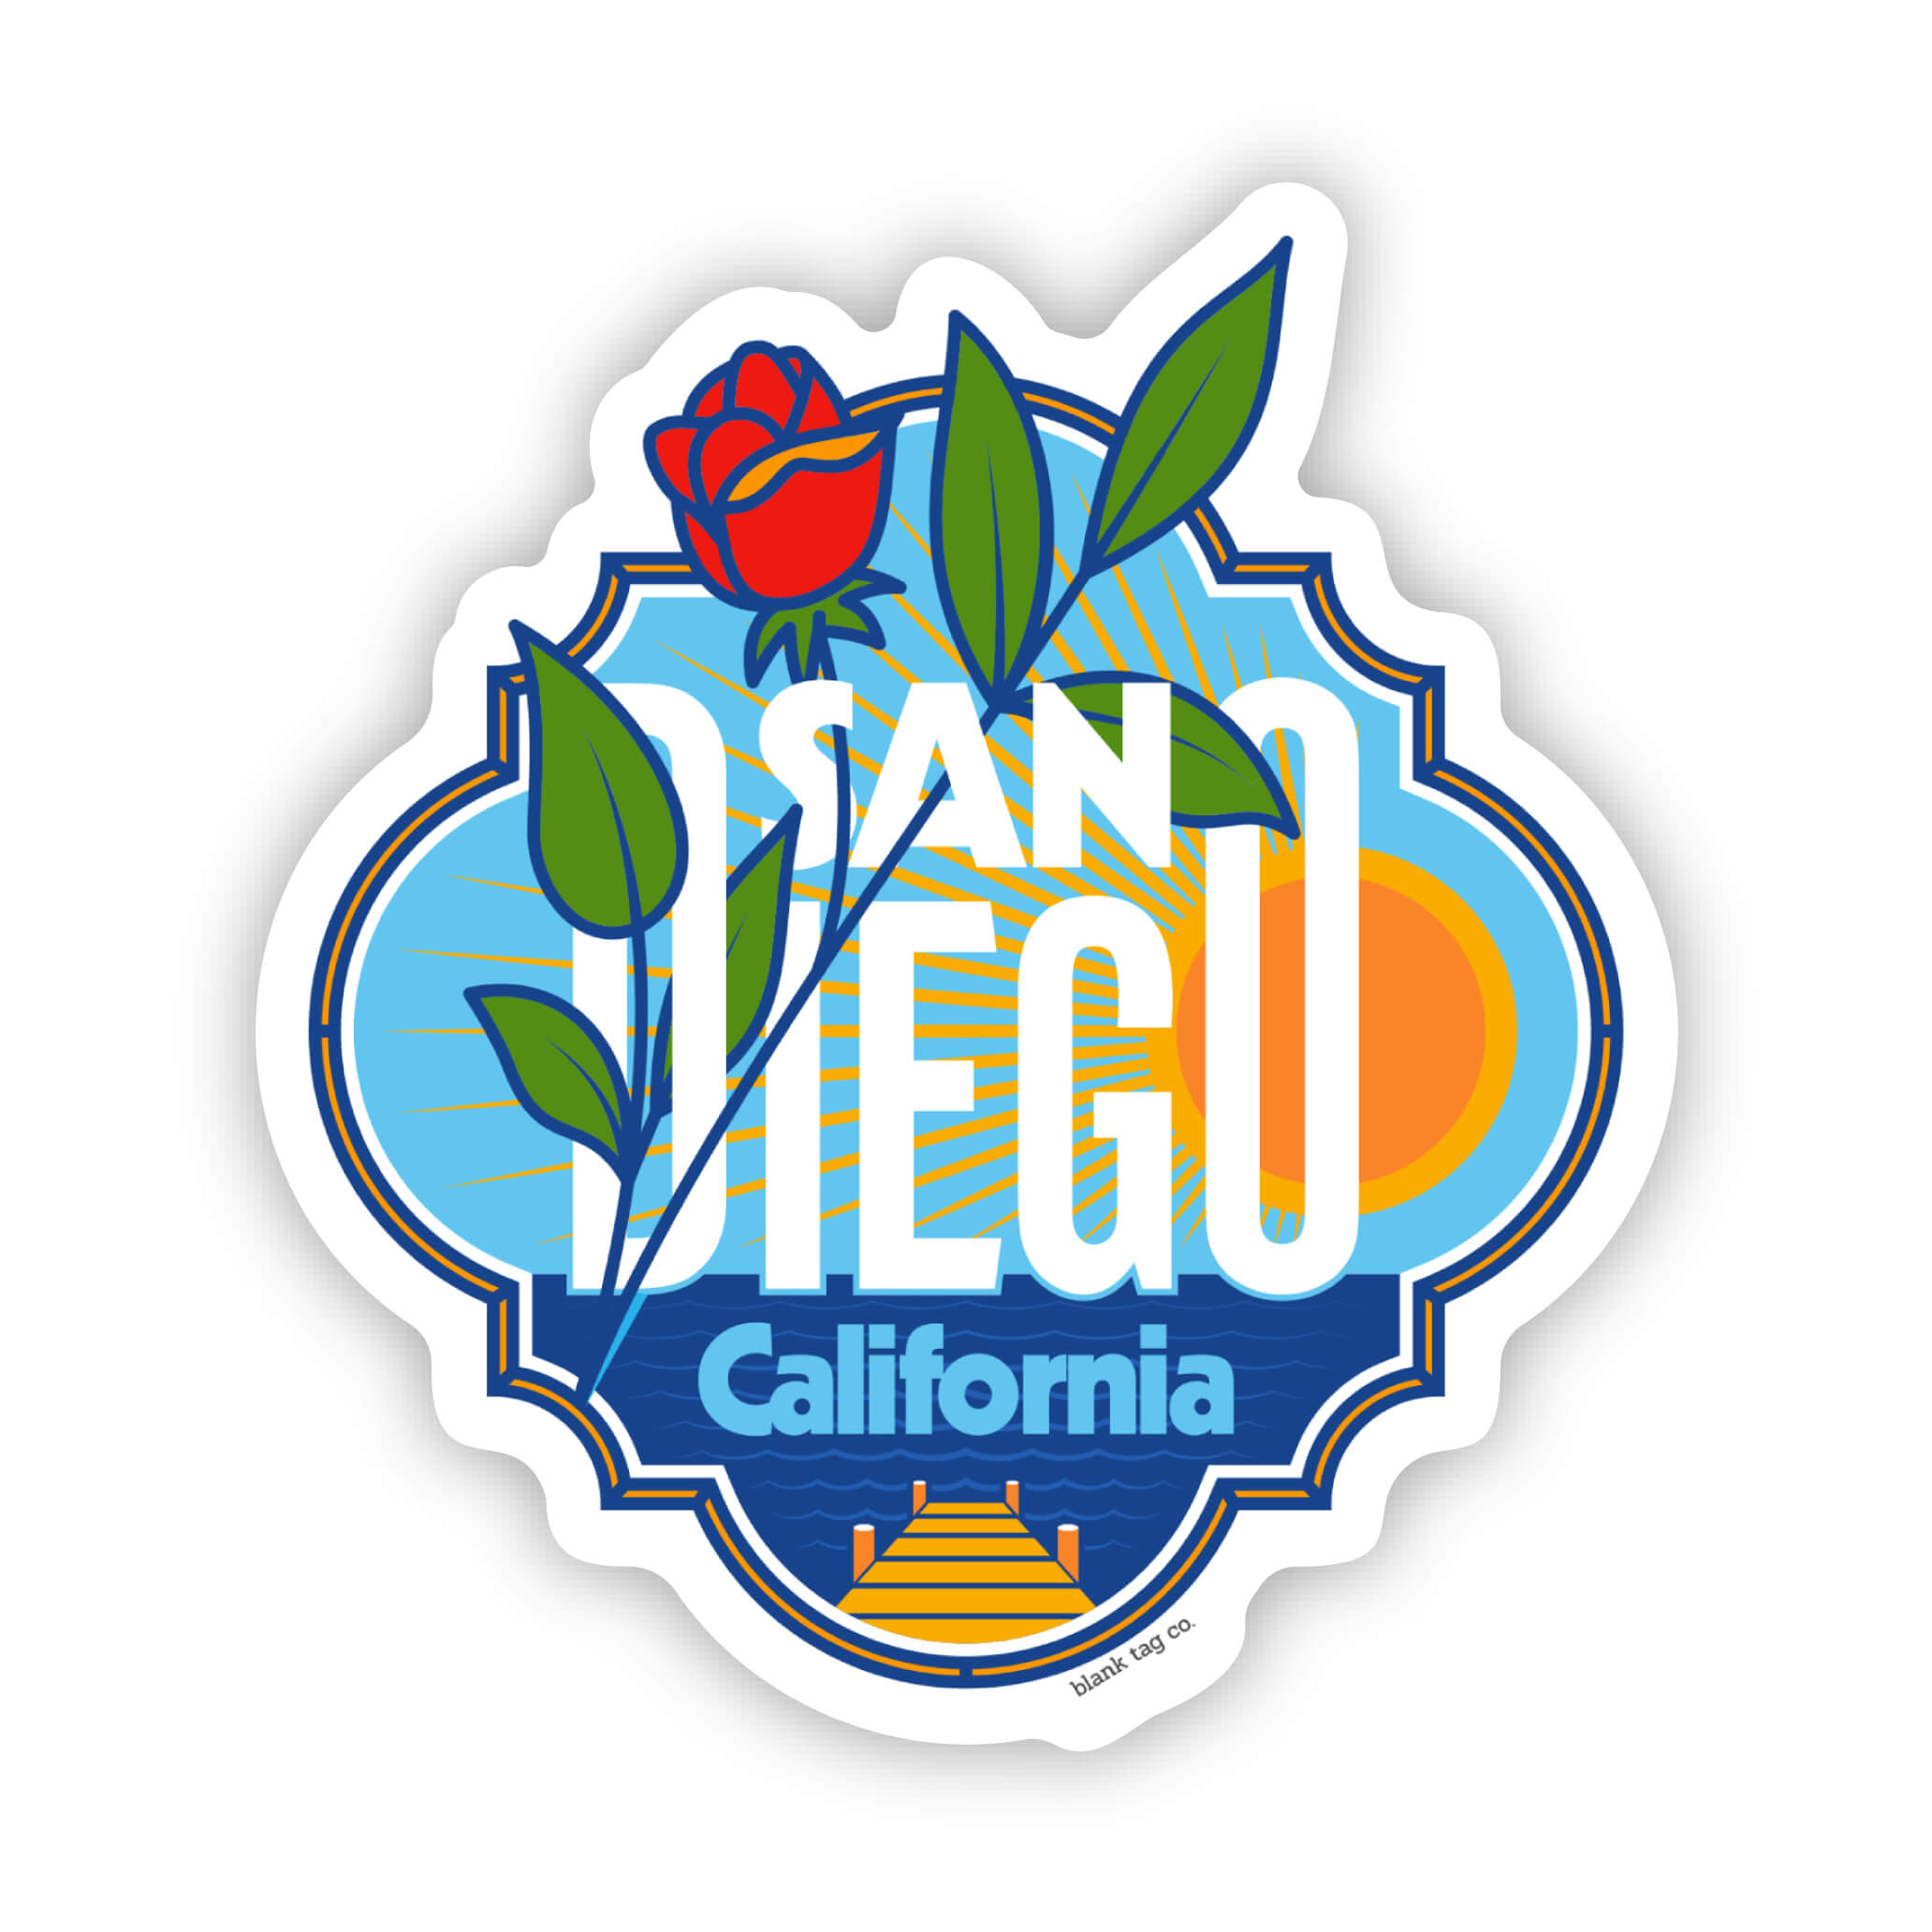 The San Diego City Badge Sticker